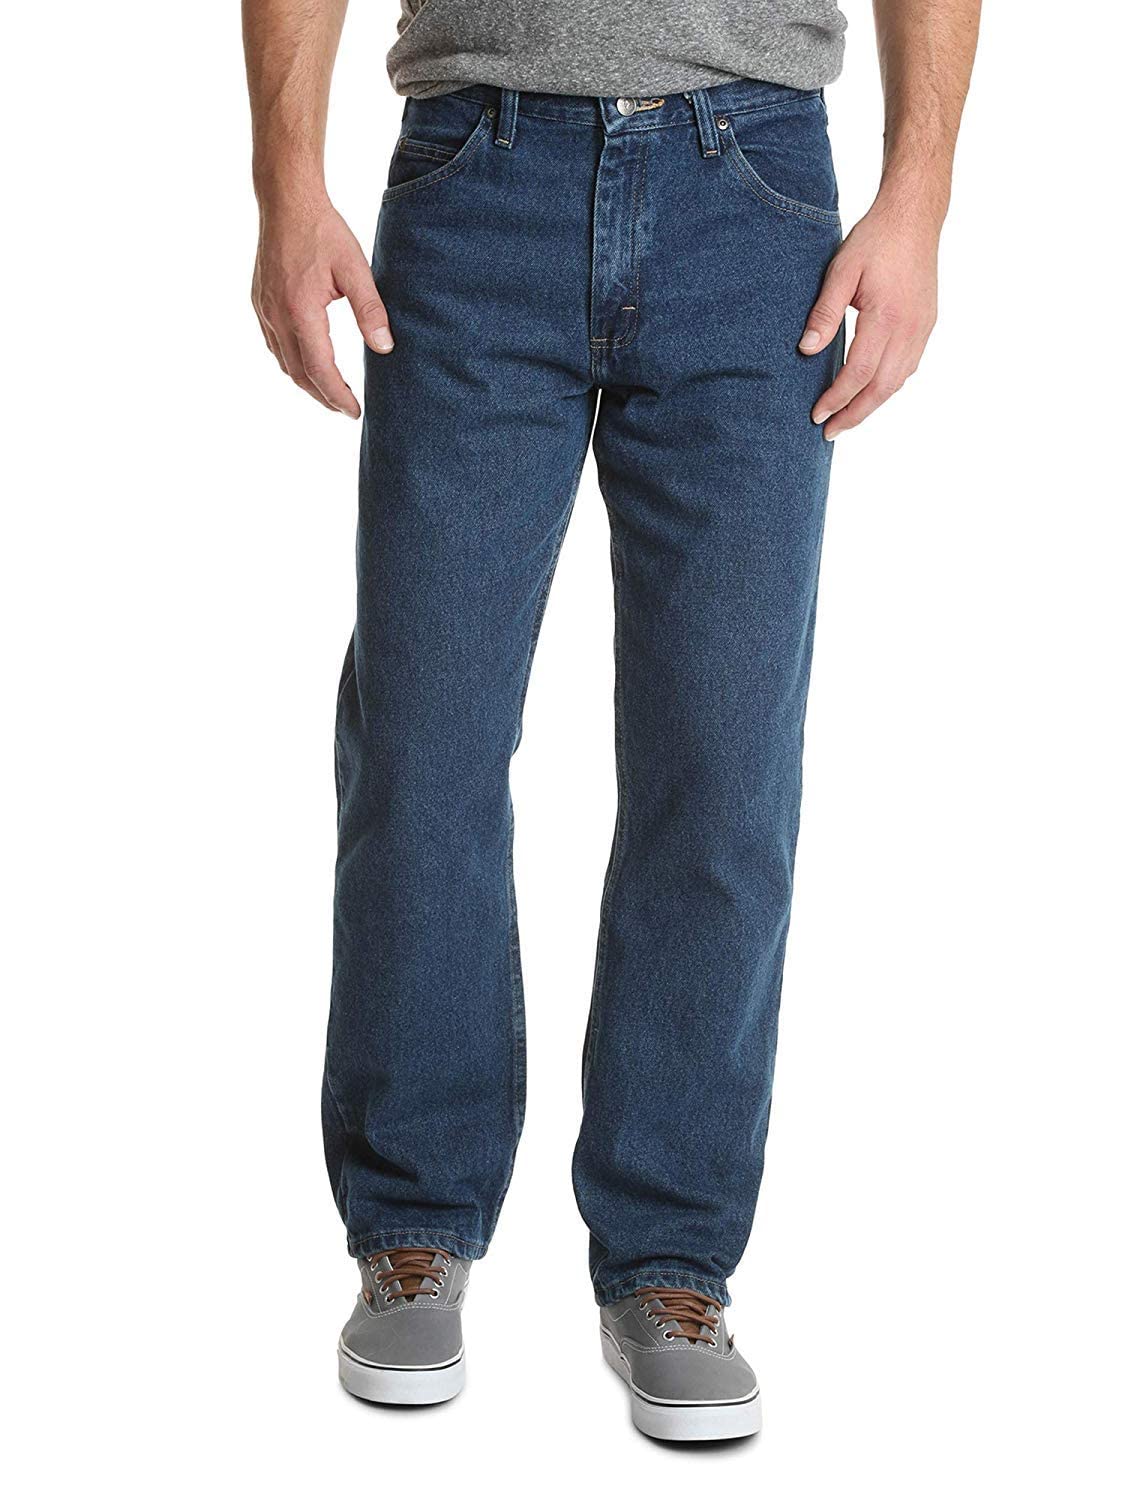 Wrangler Authentics Men's Classic 5-Pocket Relaxed Fit Cotton Jean, Dark Stonewash, 34W x 30L